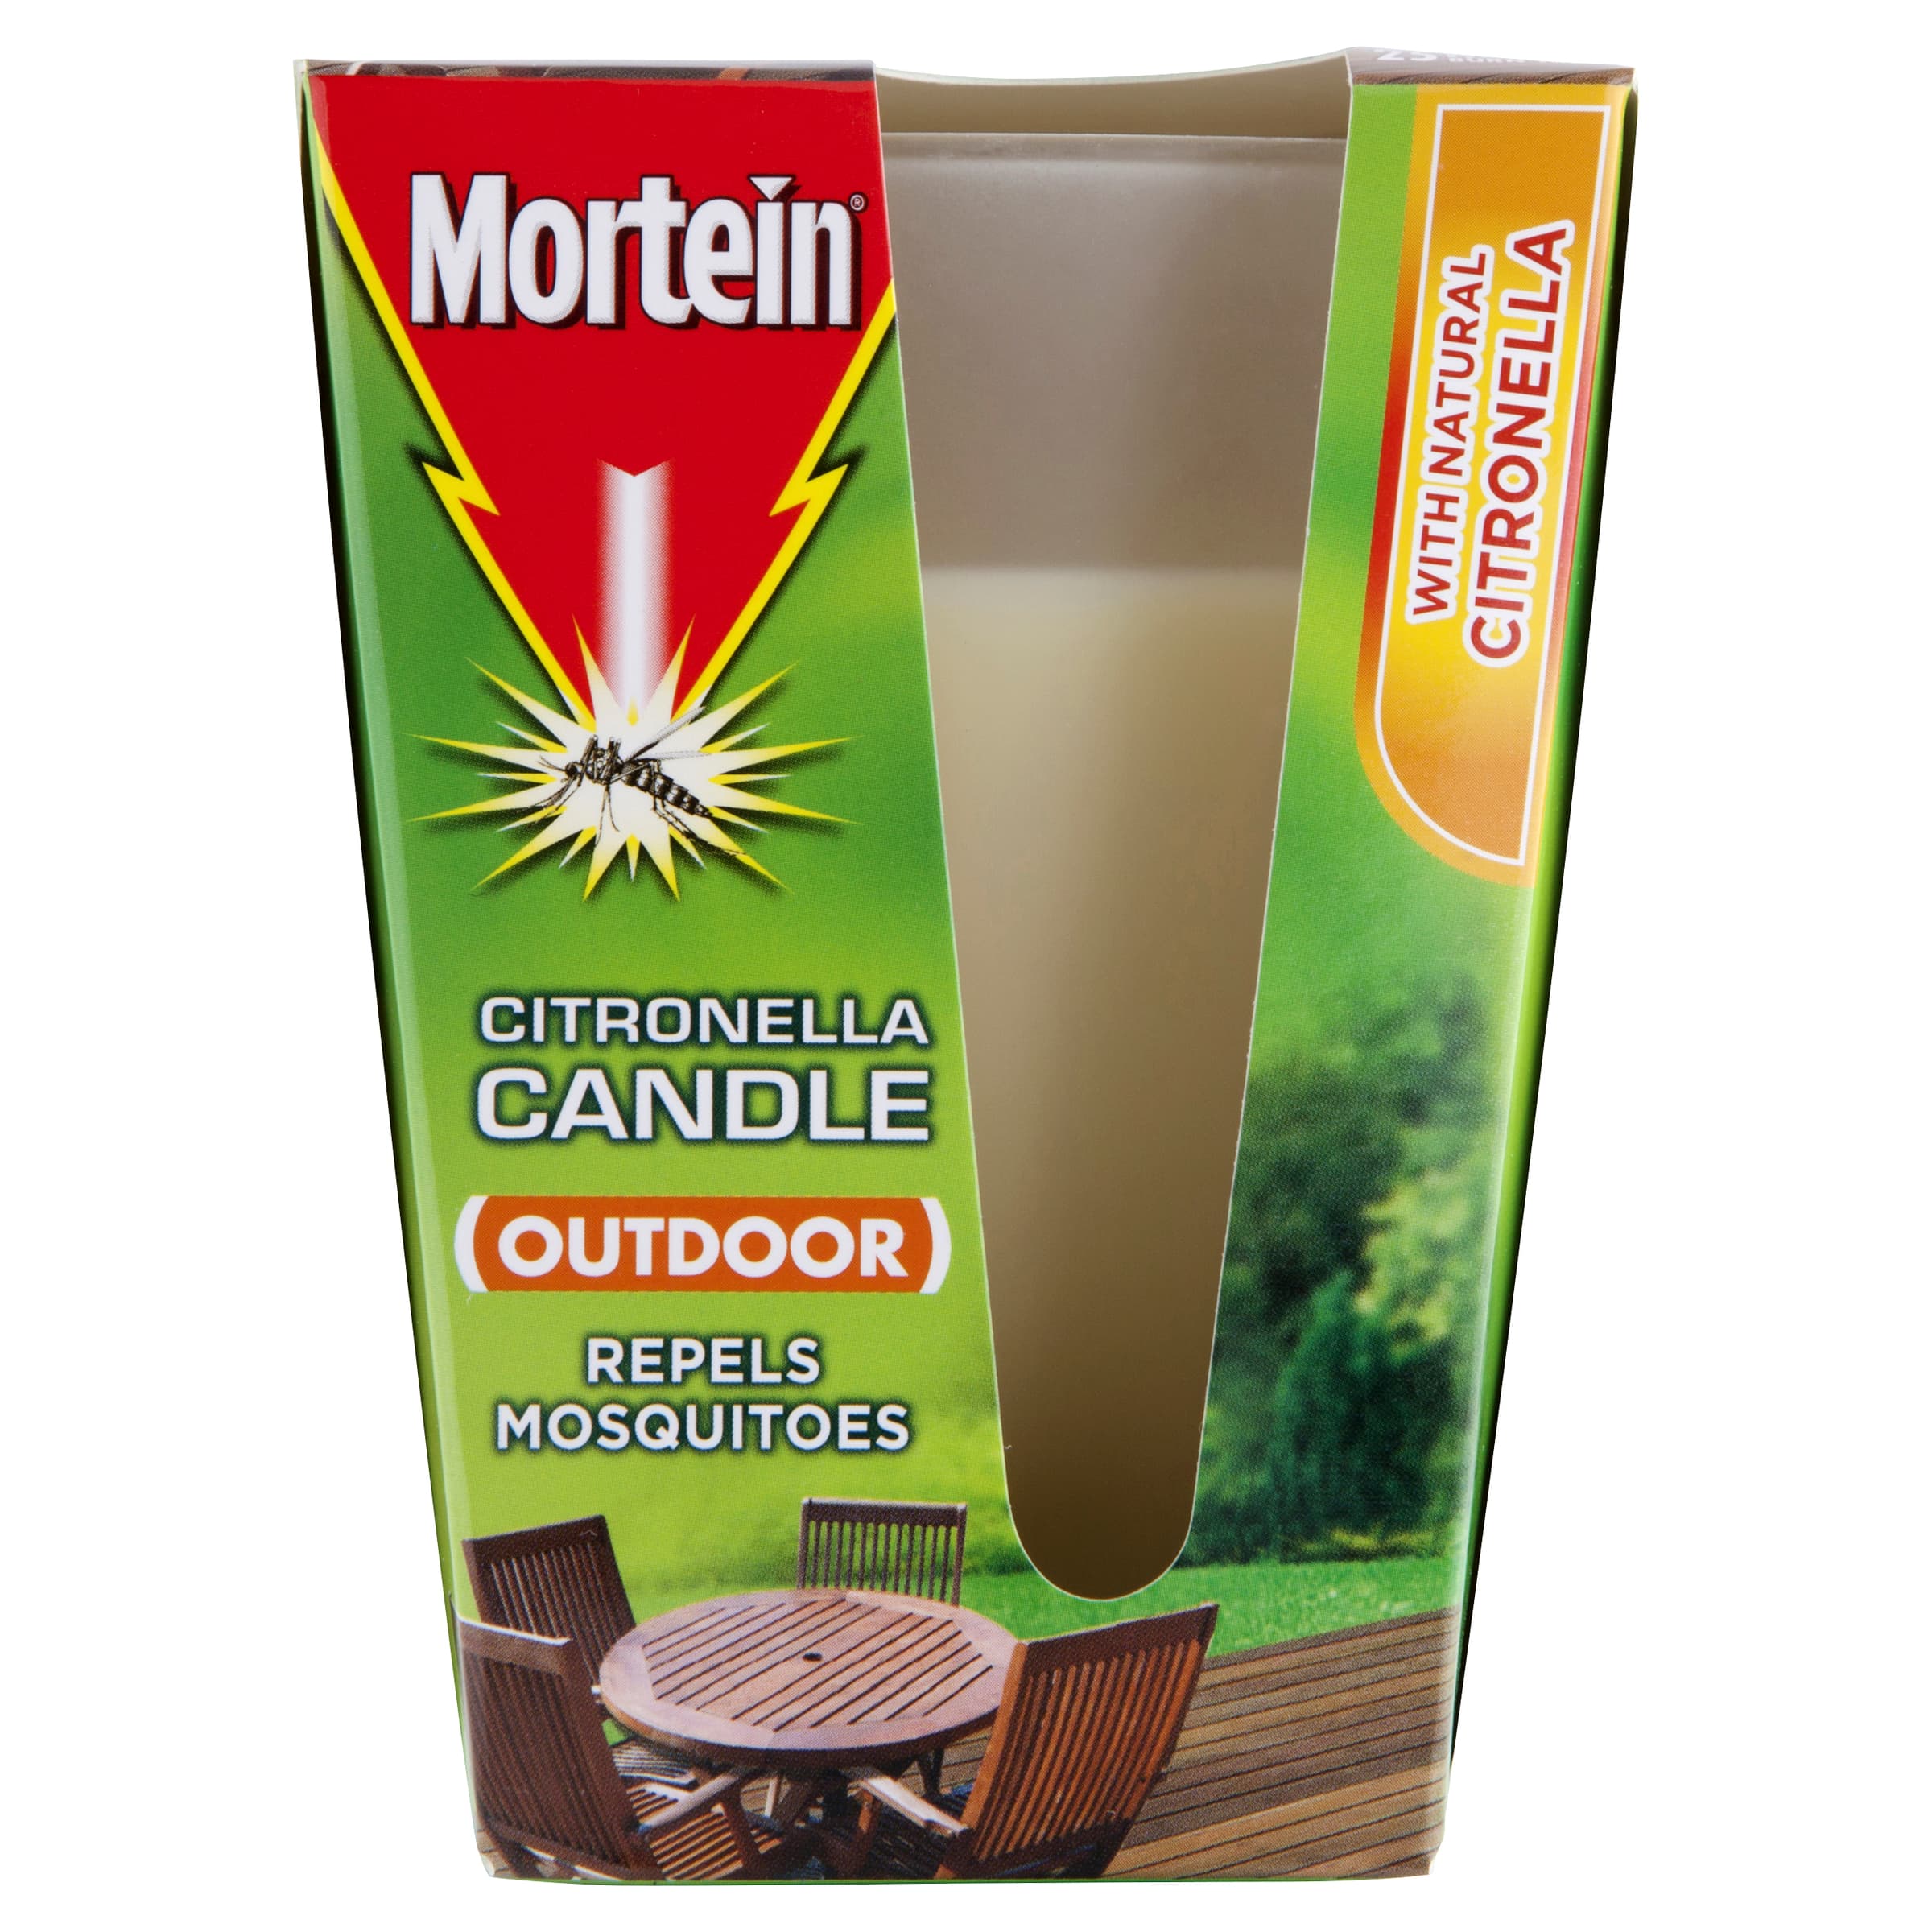 Mortein Outdoor Citronella Candle Mosquito Repellent 150g